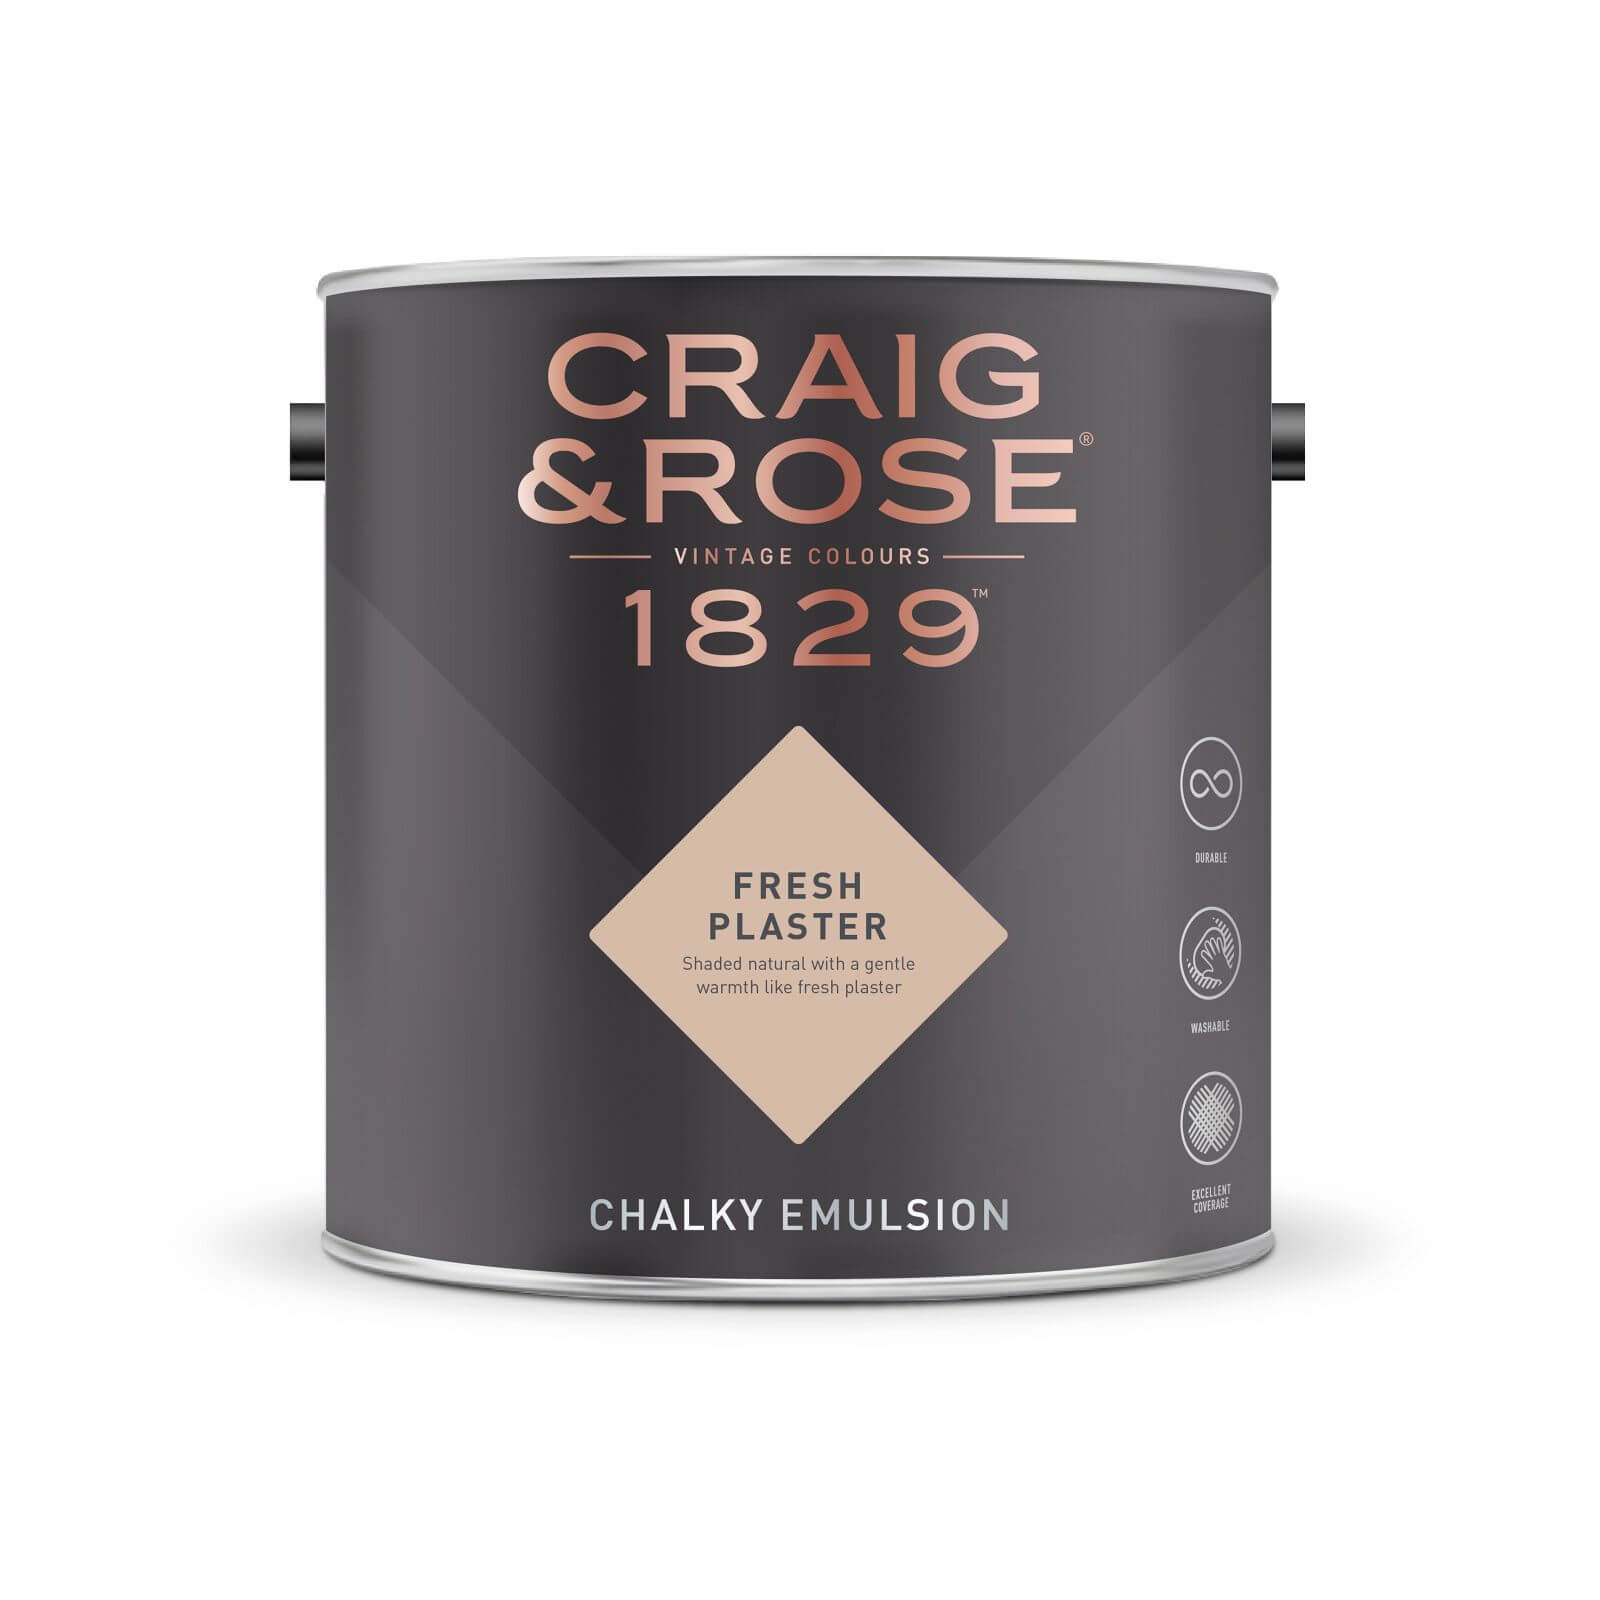 Craig & Rose 1829 Chalky Emulsion Paint Fresh Plaster - 2.5L